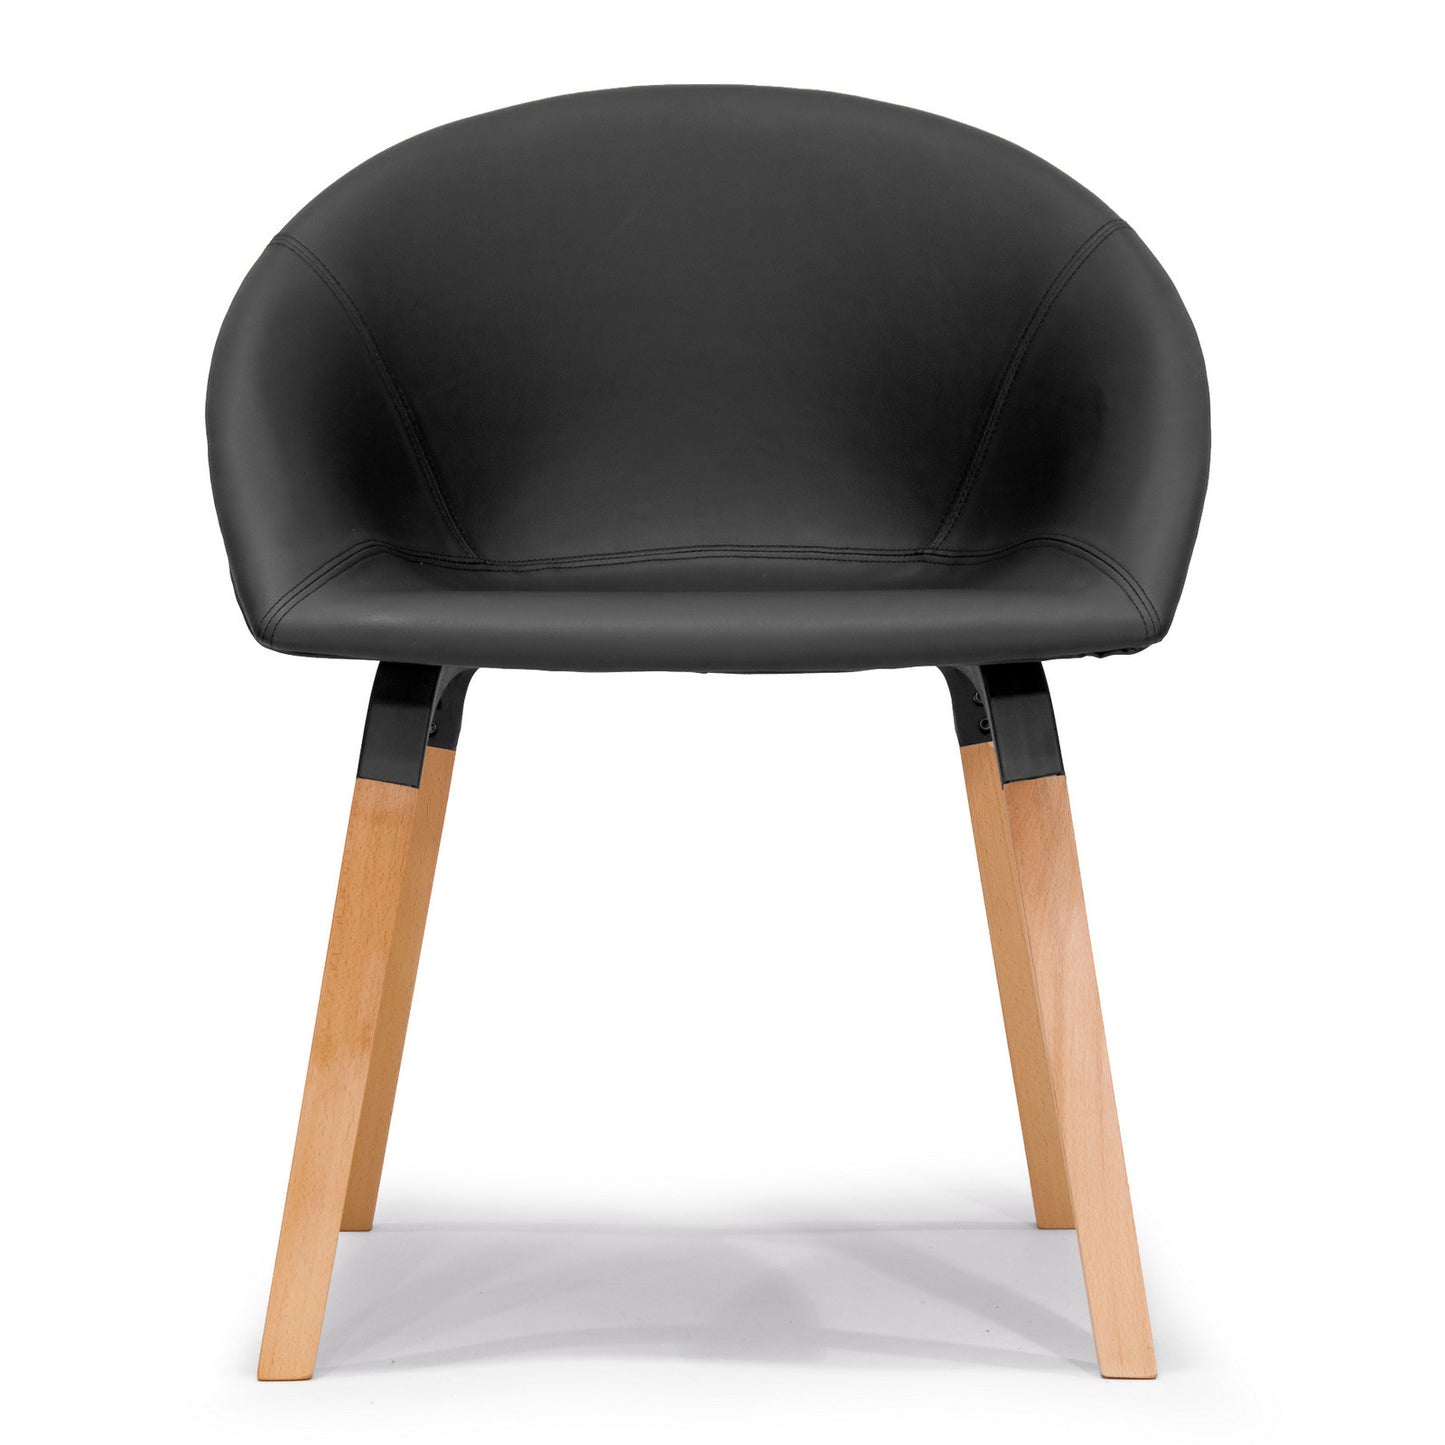 Adia Mid-century Retro Modern Black PU Leather Chair with Beech Legs (Set of 2)